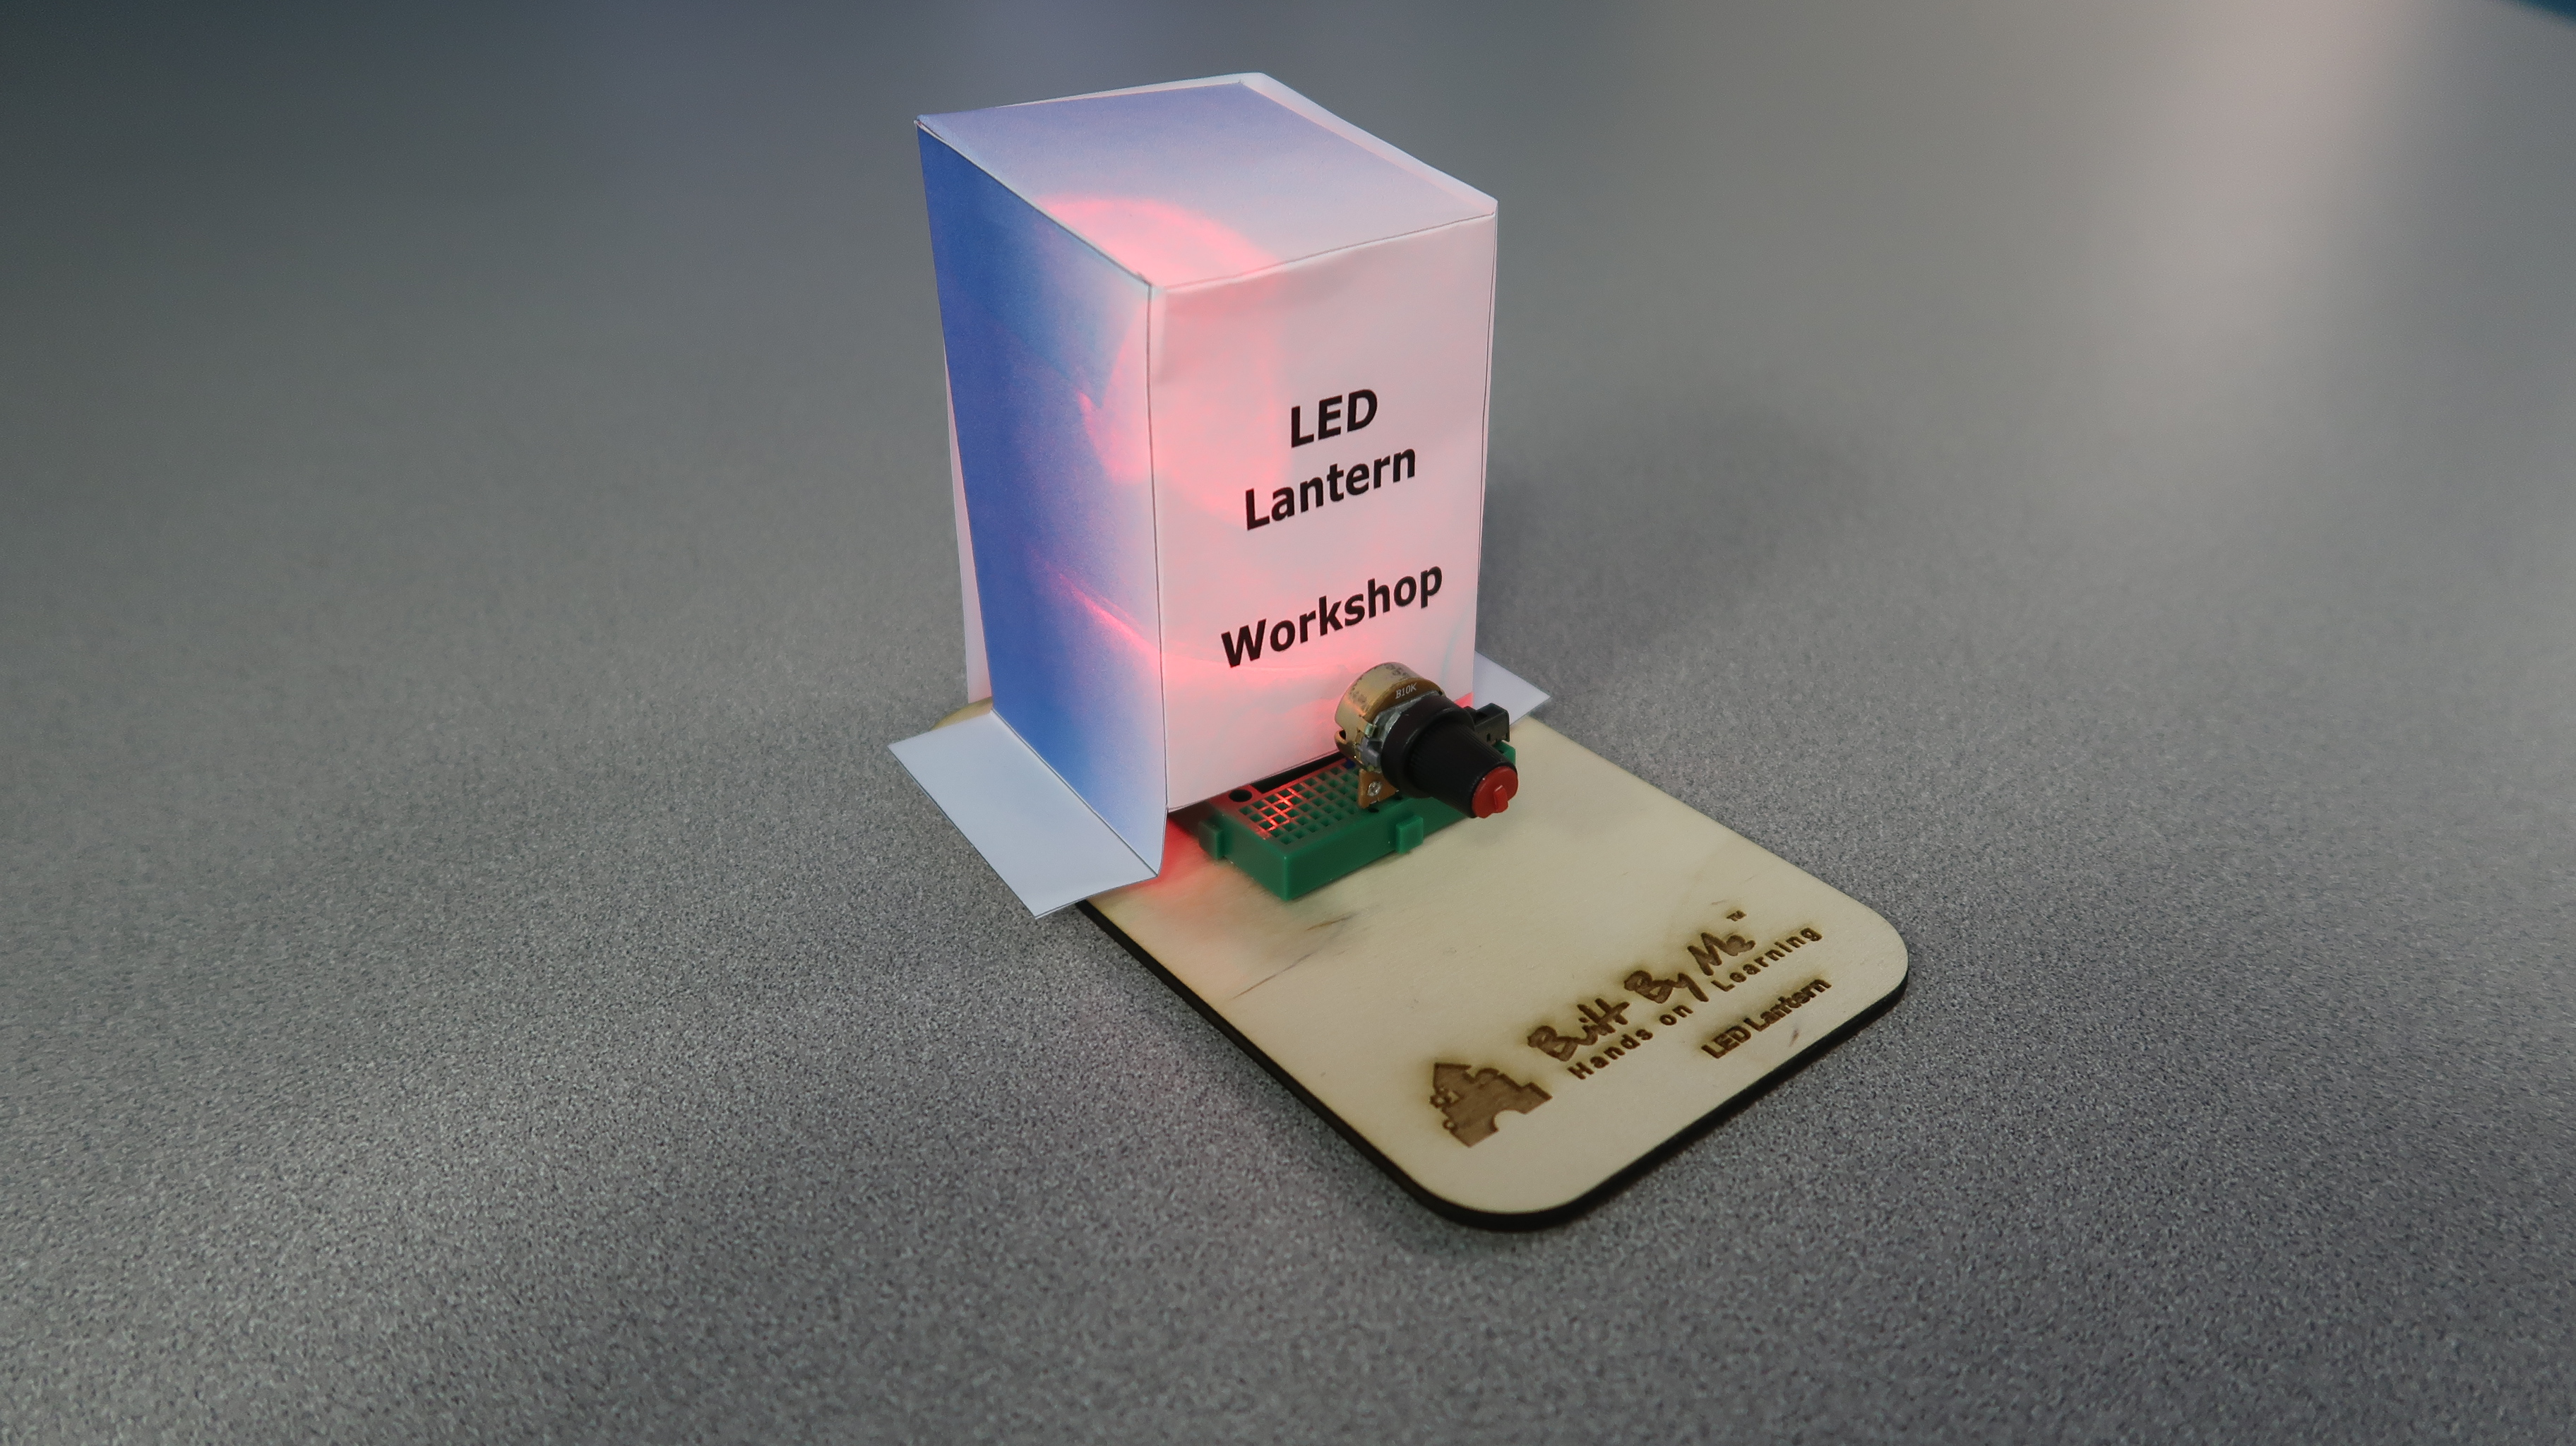 Light-up your personalized LED Lantern